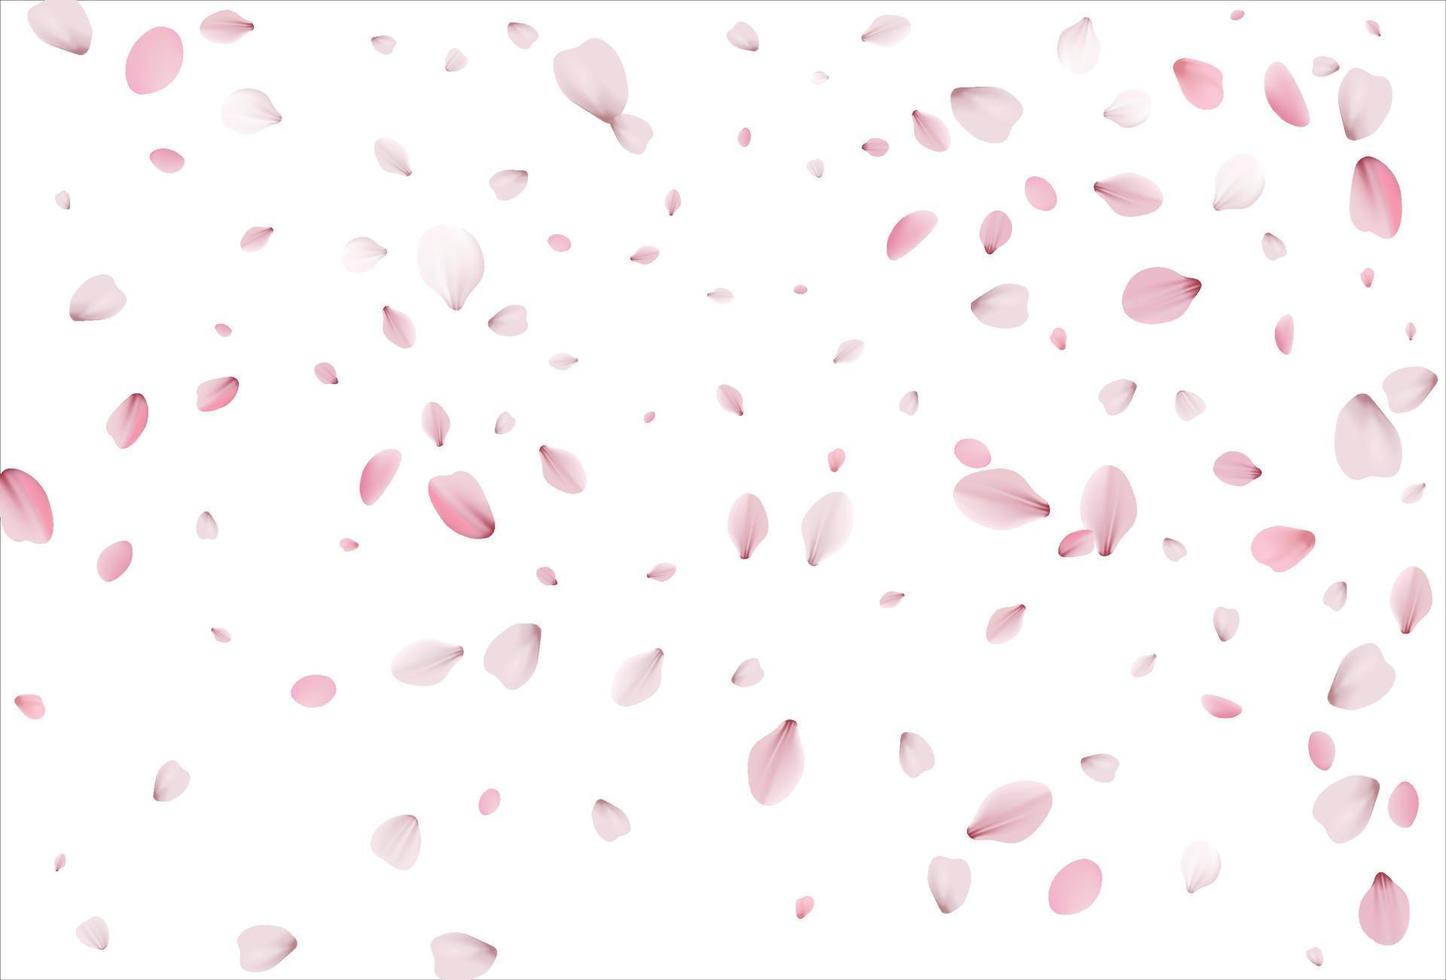 Sakura petals background. Cherry petals backdrop vector